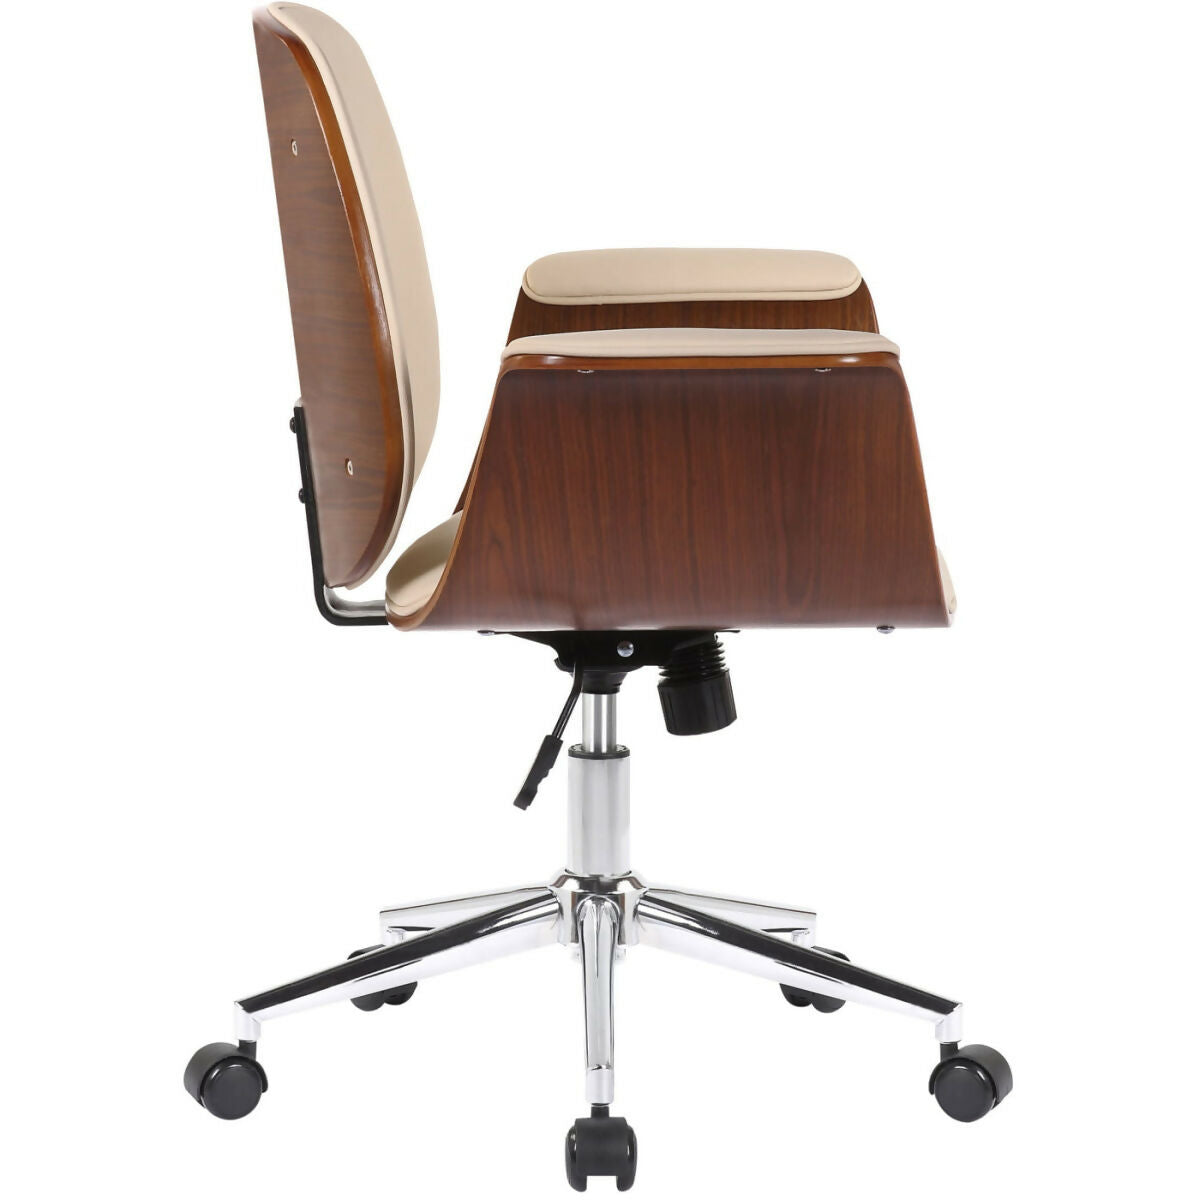 Kemberg office chair - Walnut - Cream